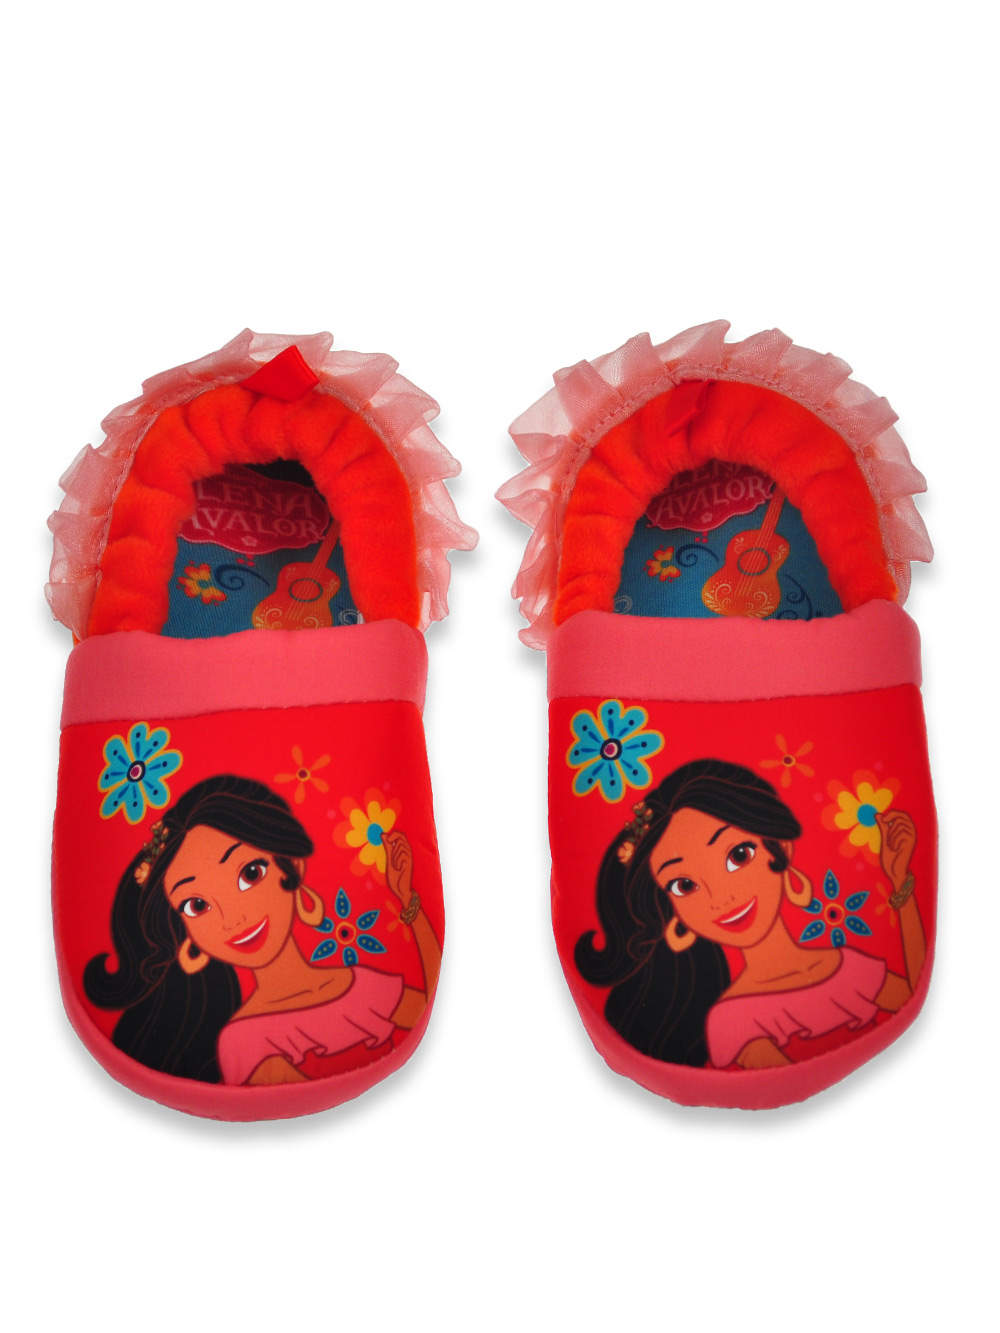 elena of avalor slippers